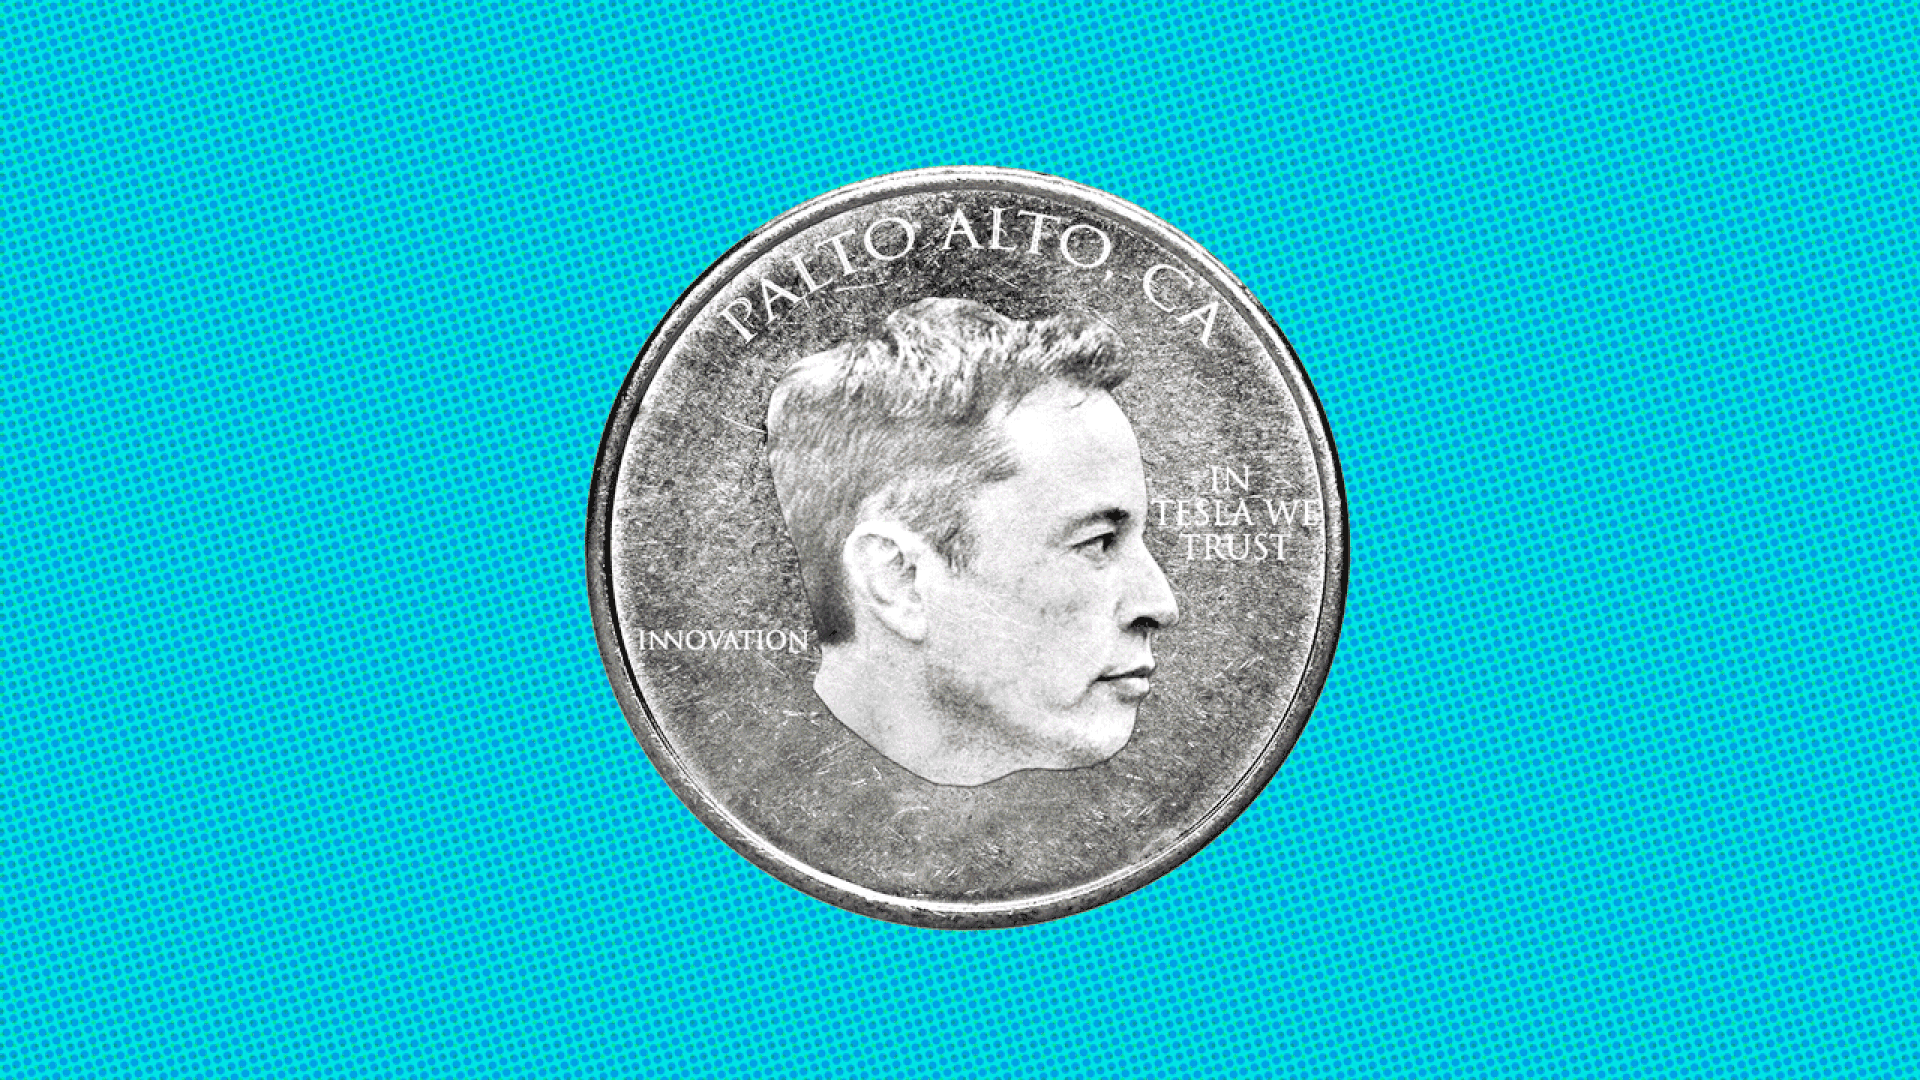 A shrinking Elon coin